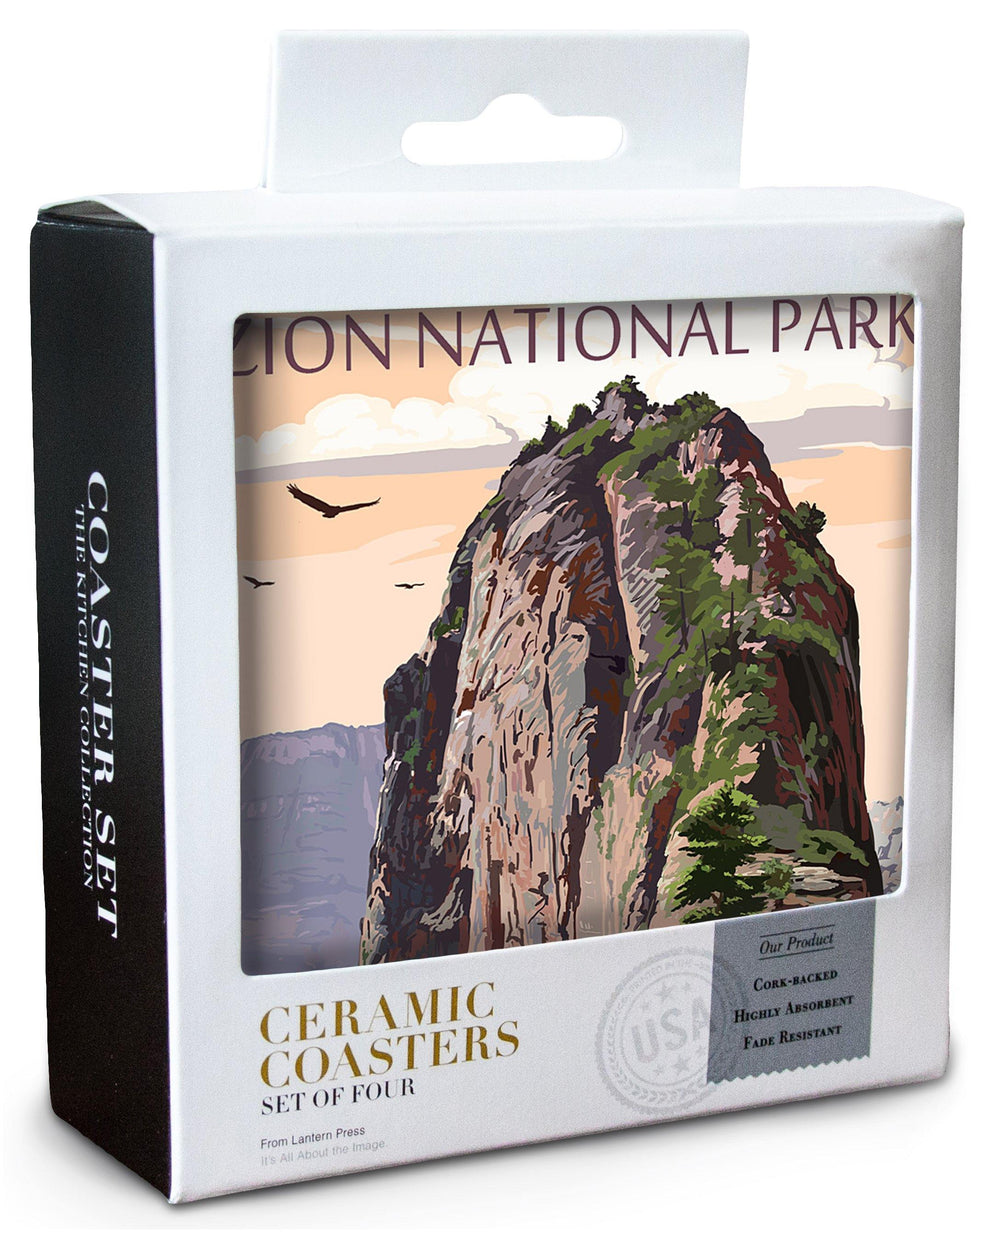 Zion National Park, Utah, Angels Landing & Condors, Lantern Press Artwork, Coaster Set Coasters Lantern Press 